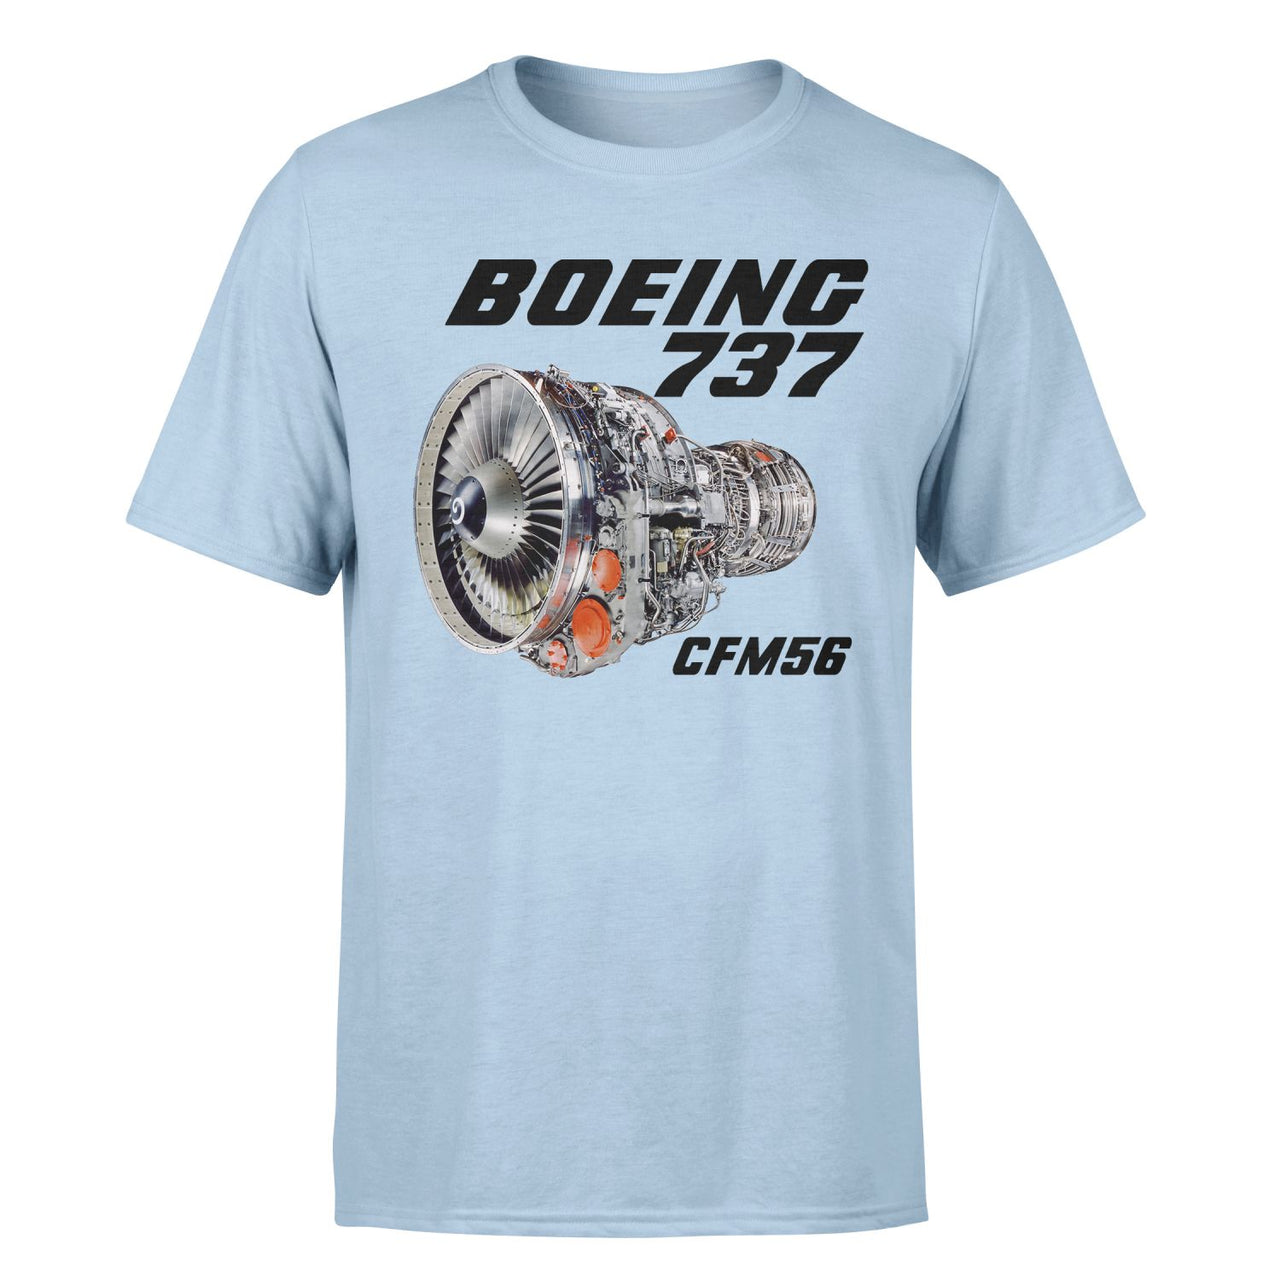 Boeing 737 Engine & CFM56 Designed T-Shirts